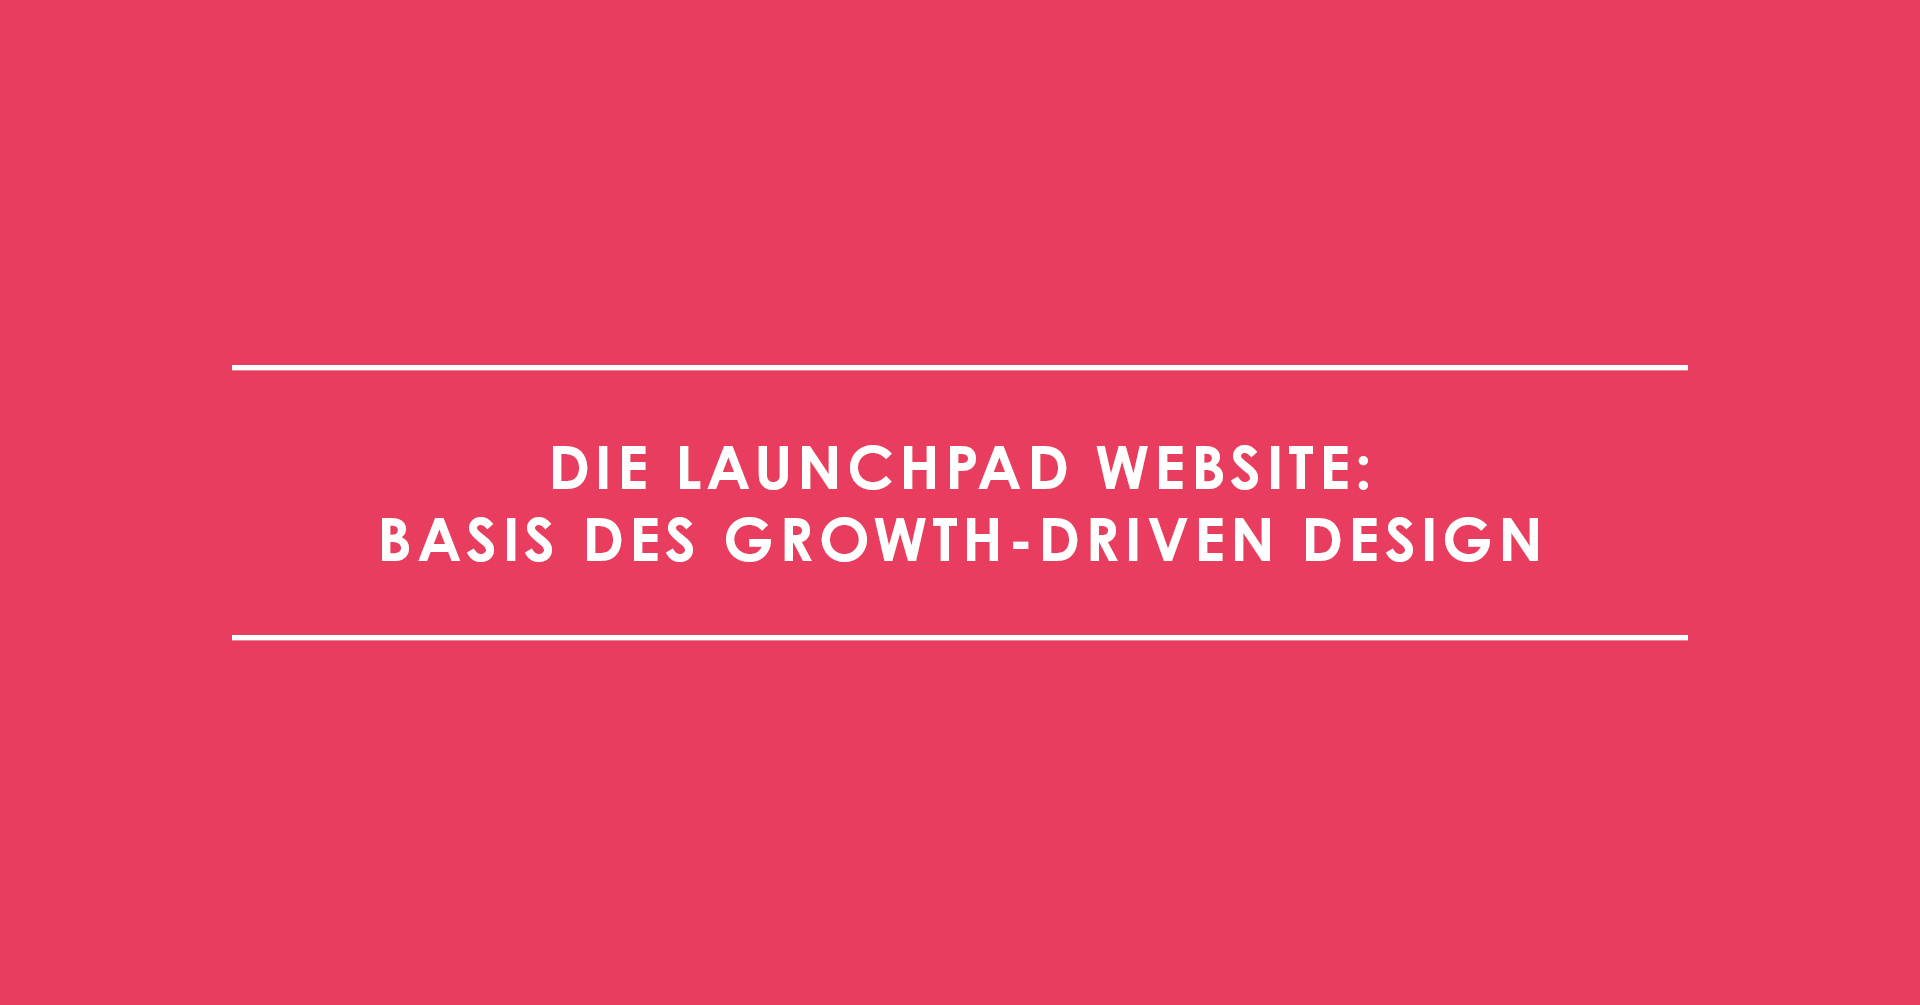 Die Launchpad Website: Basis des Growth-Driven Design